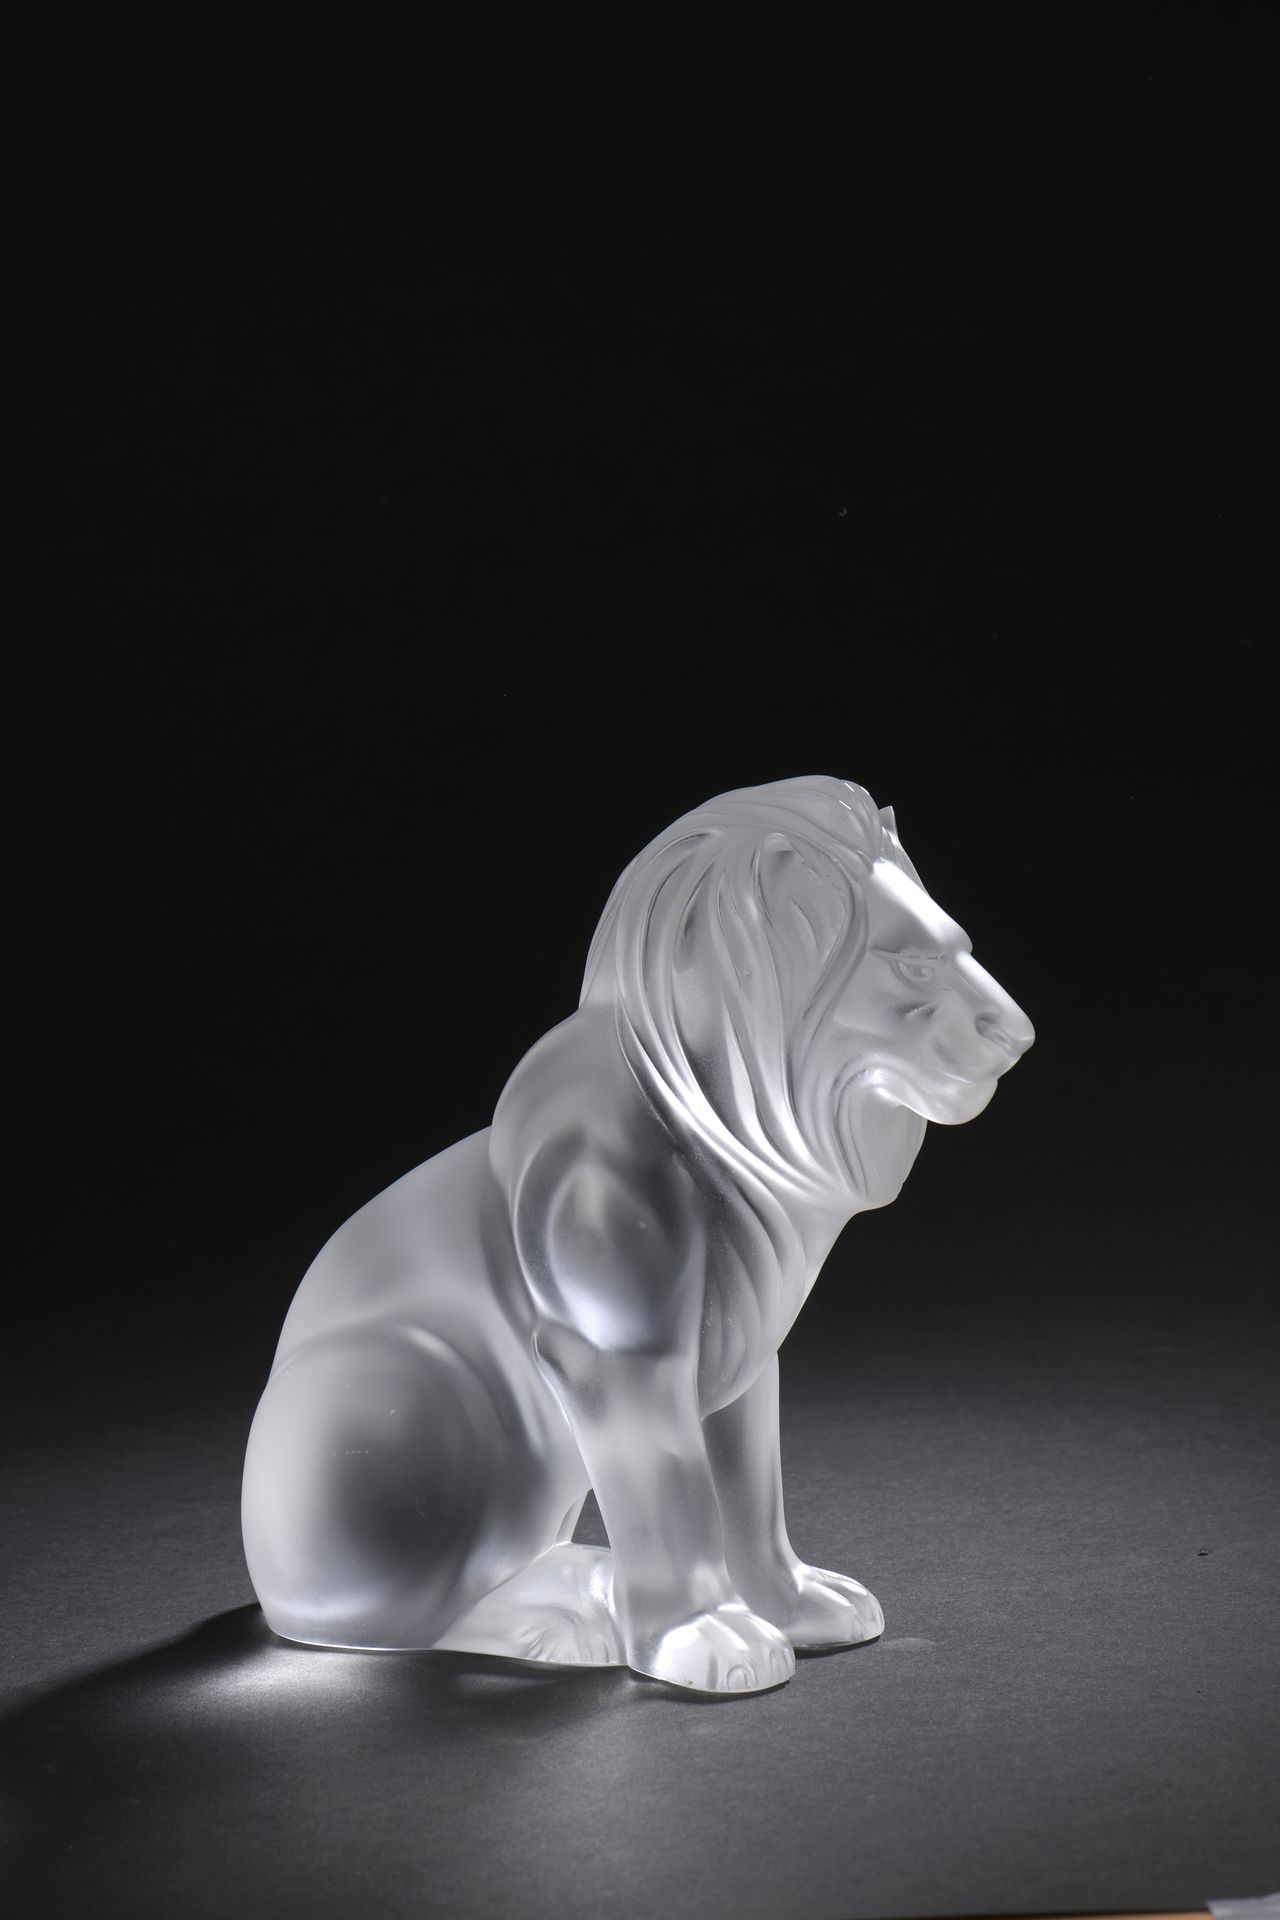 Null LALIQUE 法国

缎面水晶狮子，"Bamara "型号

底座下有 "Lalique France "签名

高_20厘米

(铸造缺陷)